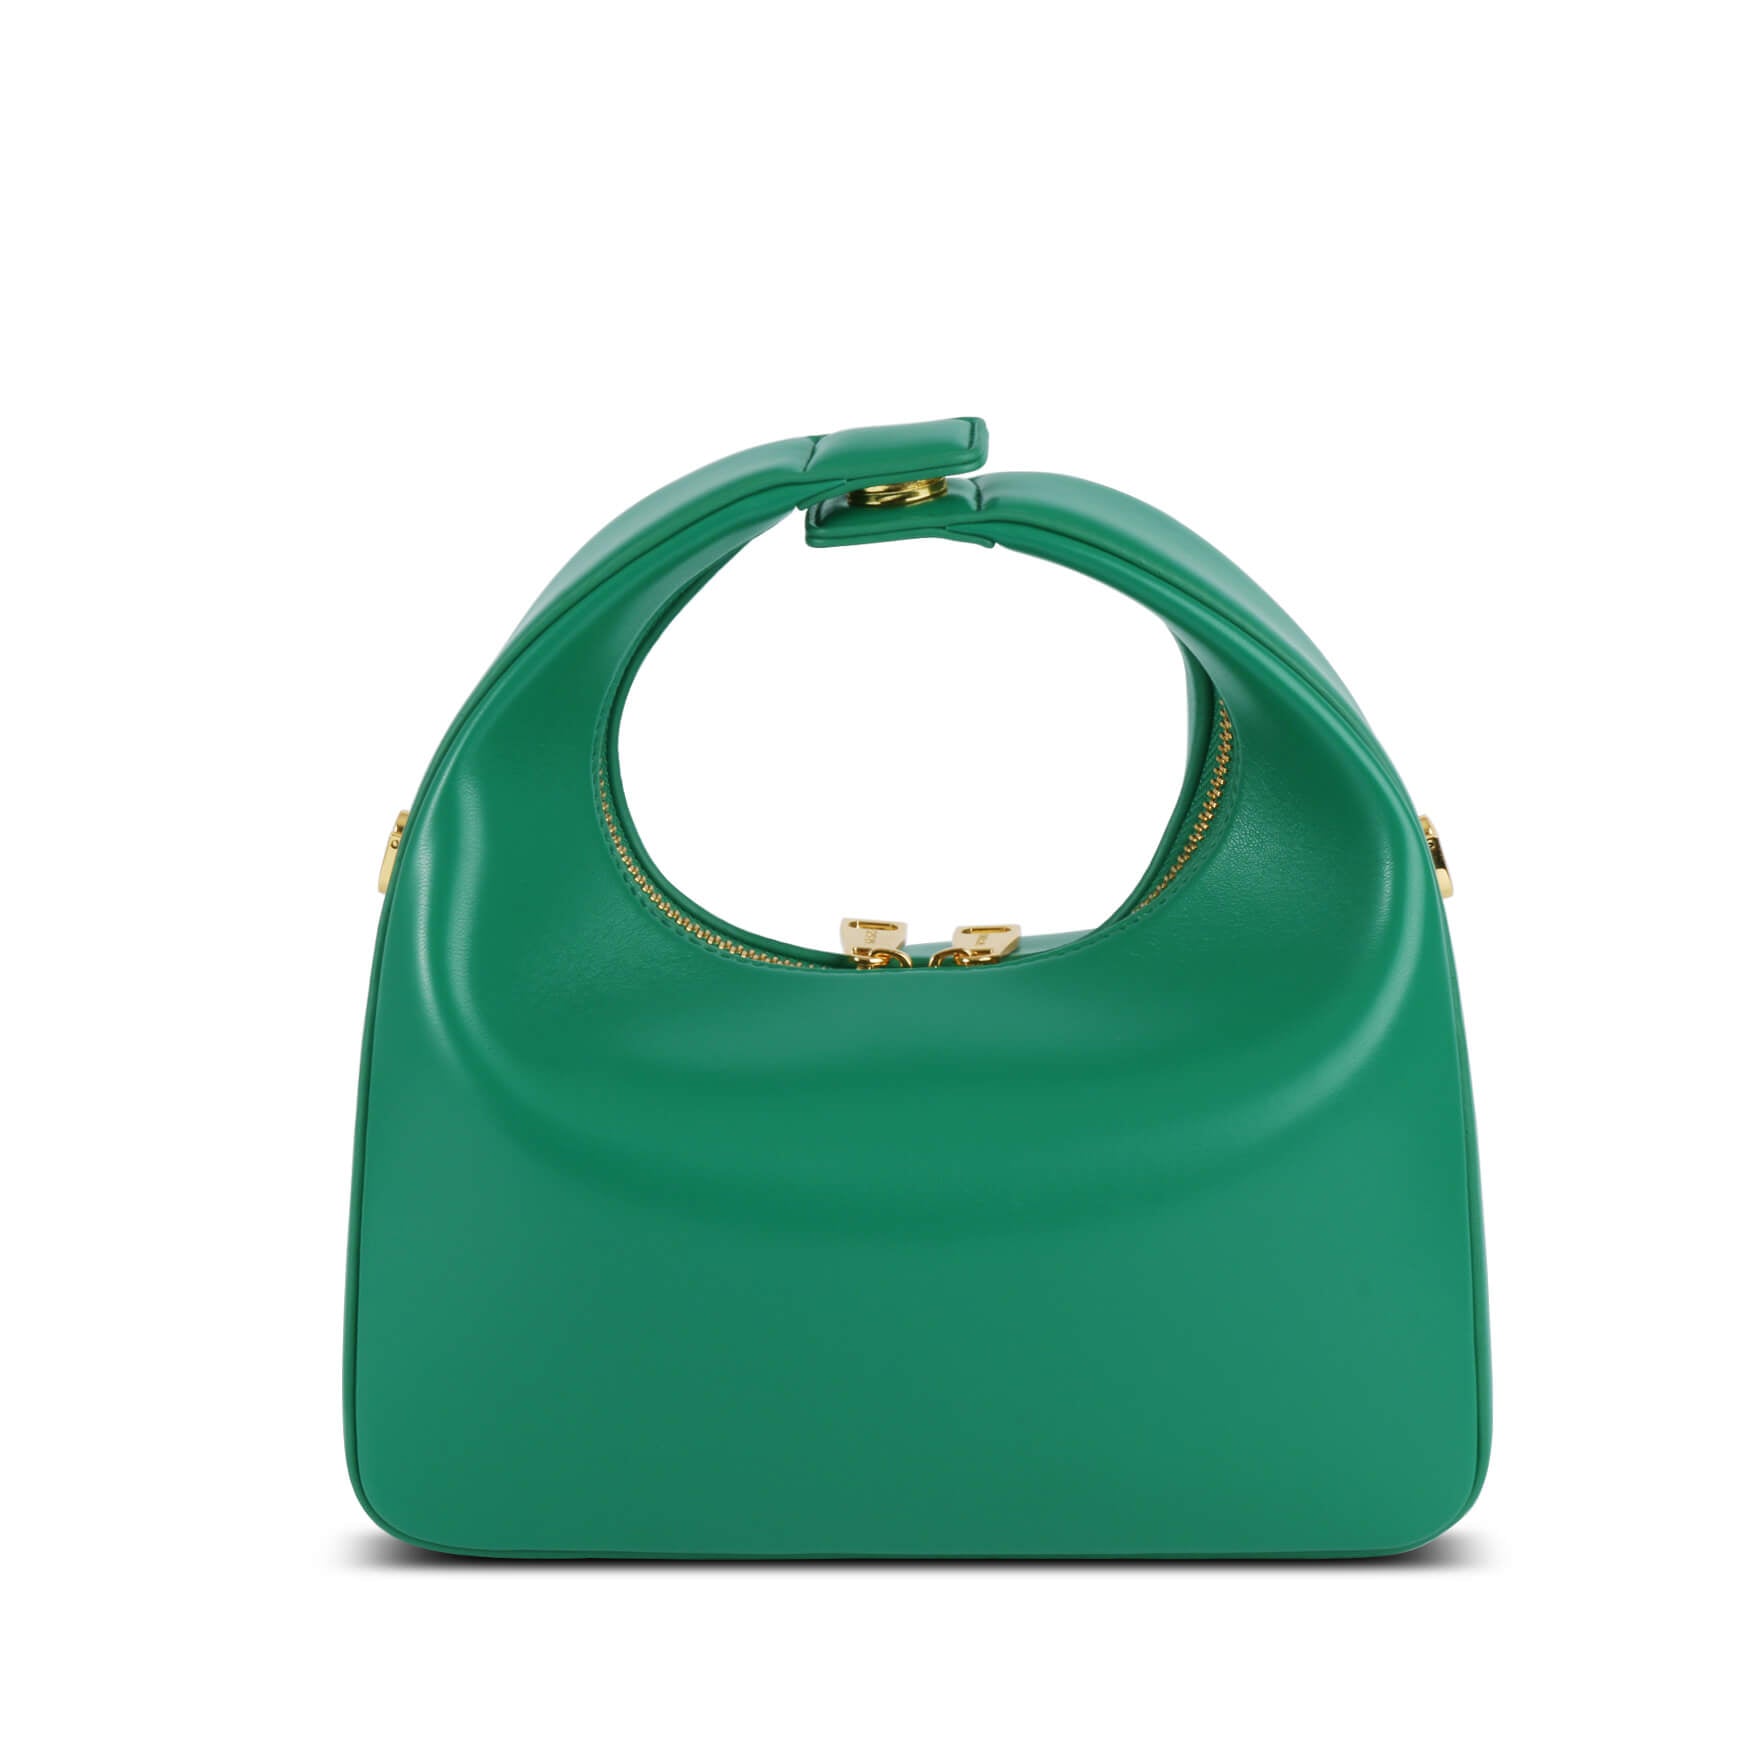 Strapeze Handbag by EY Boutique | EspeciallyYours.com | Especially Yours